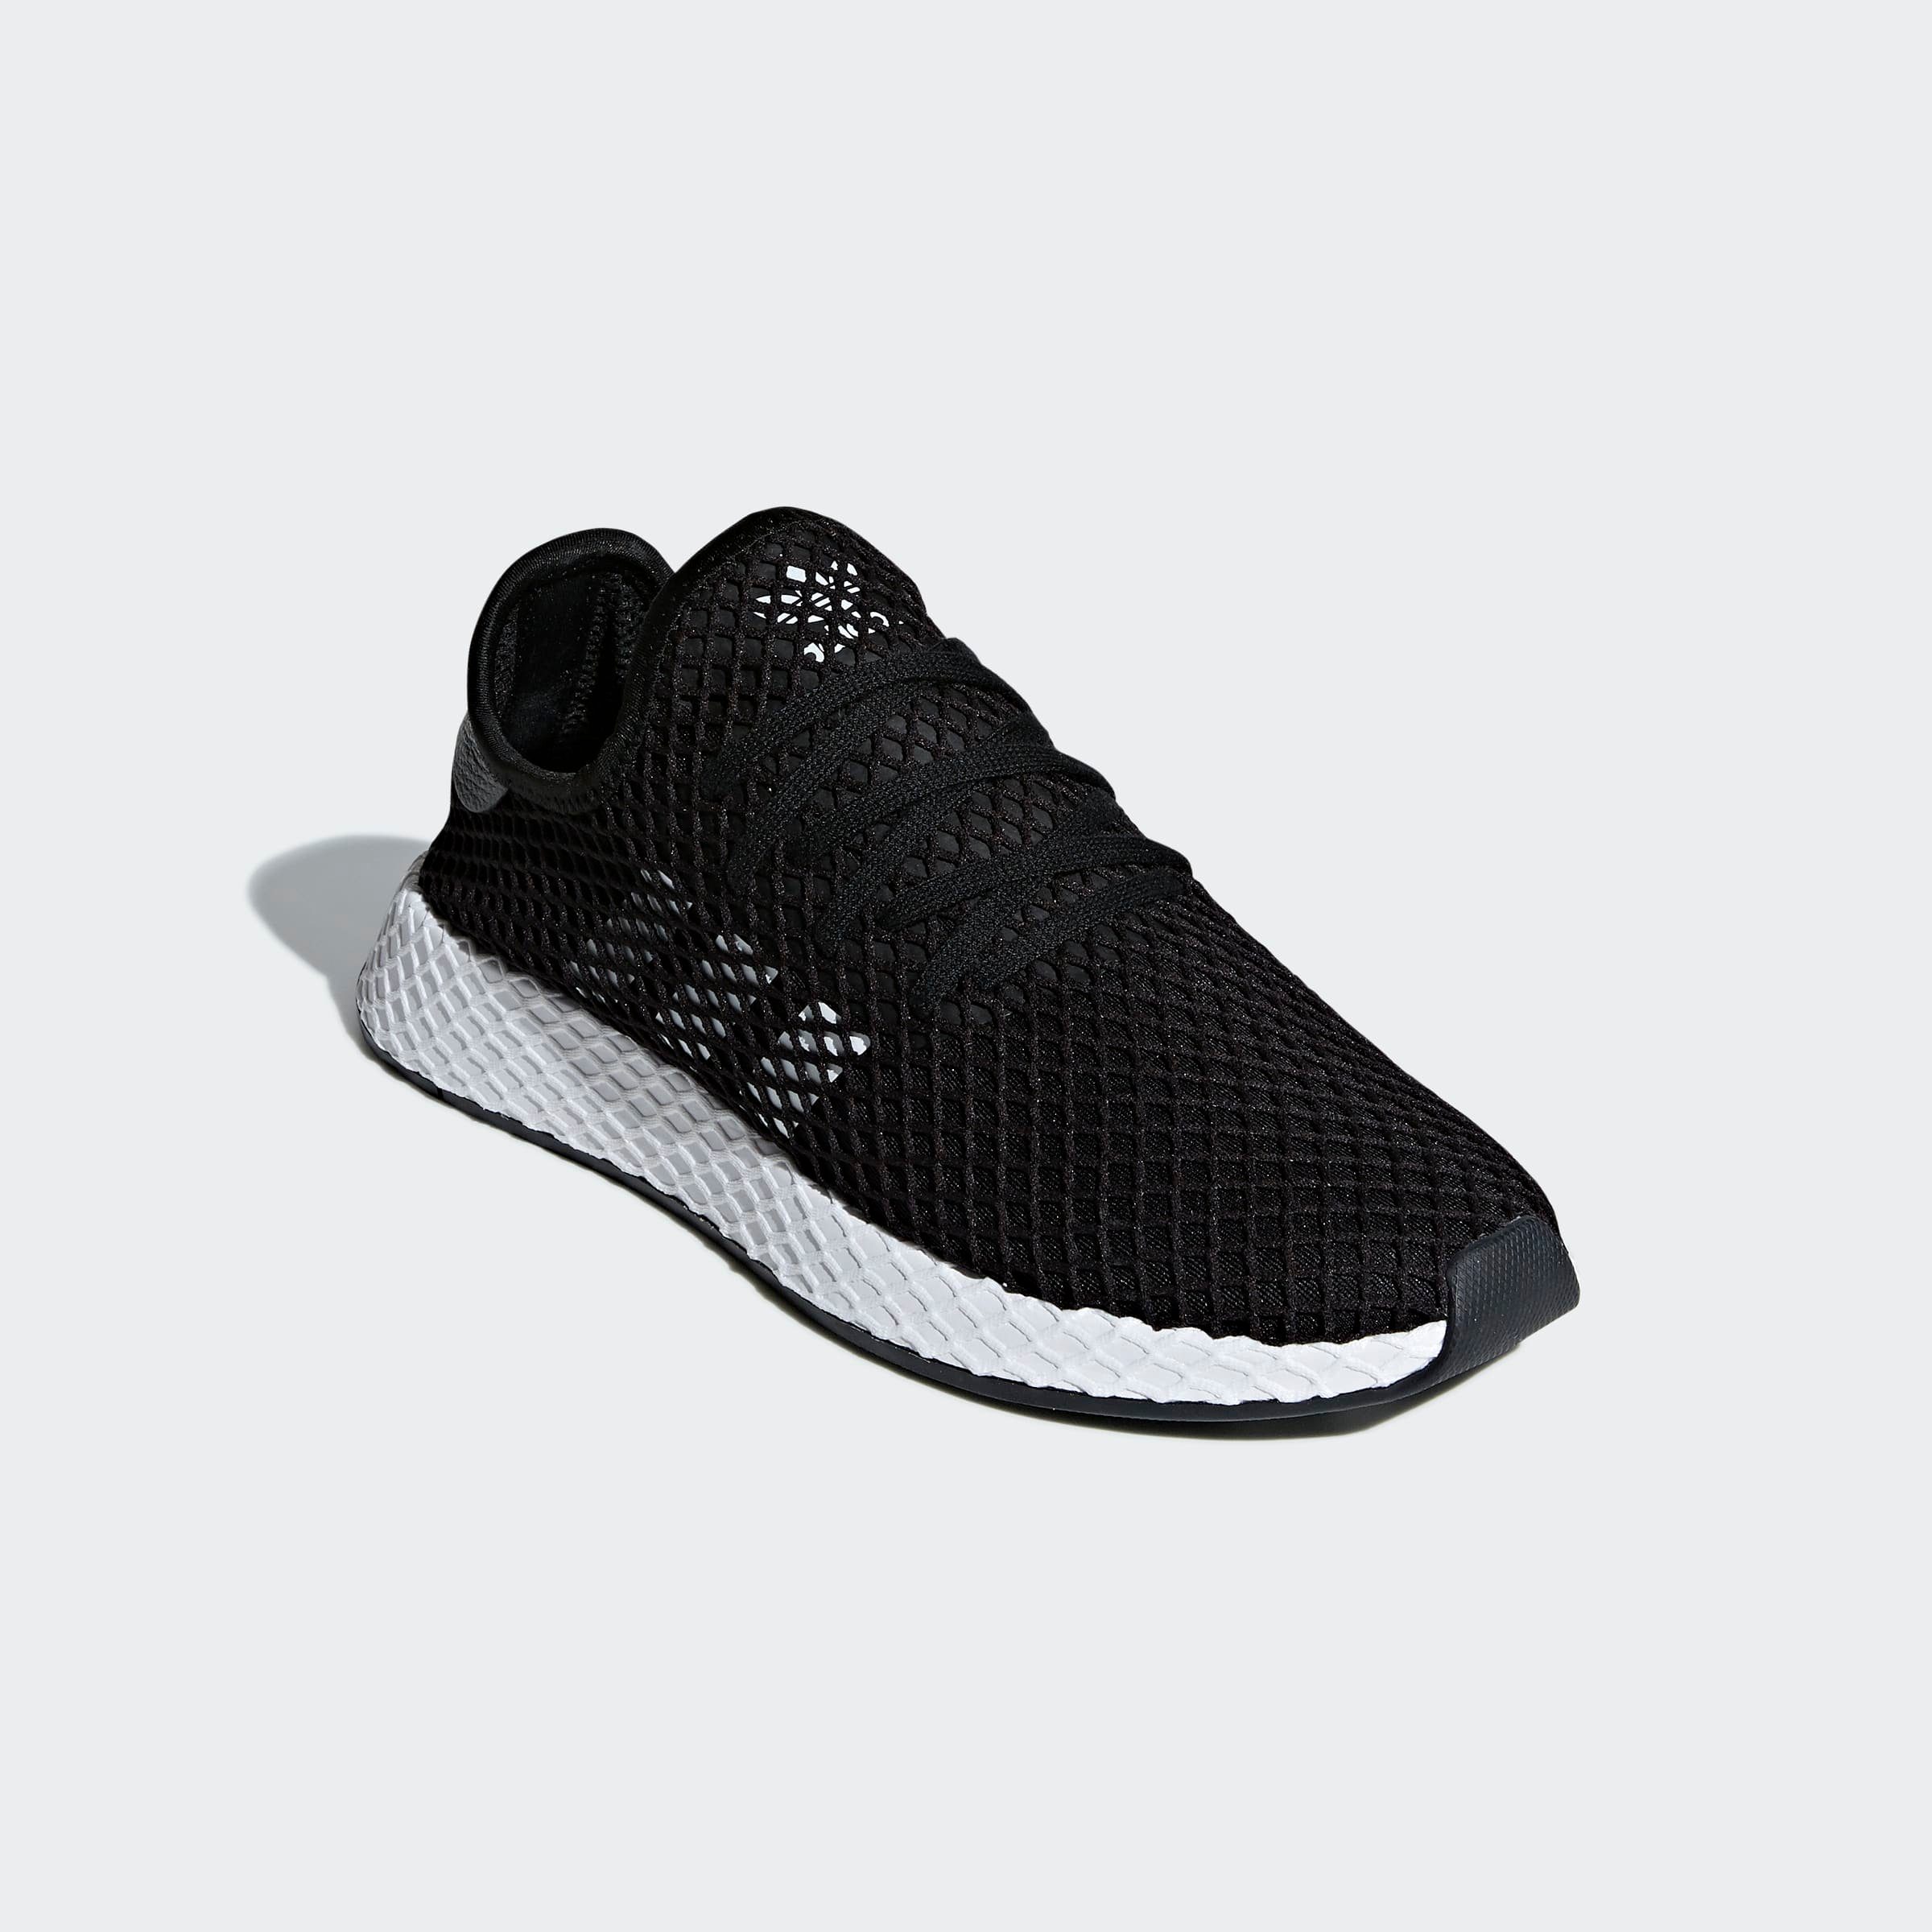 adidas Originals »DEERUPT RUNNER« Sneaker kaufen | OTTO